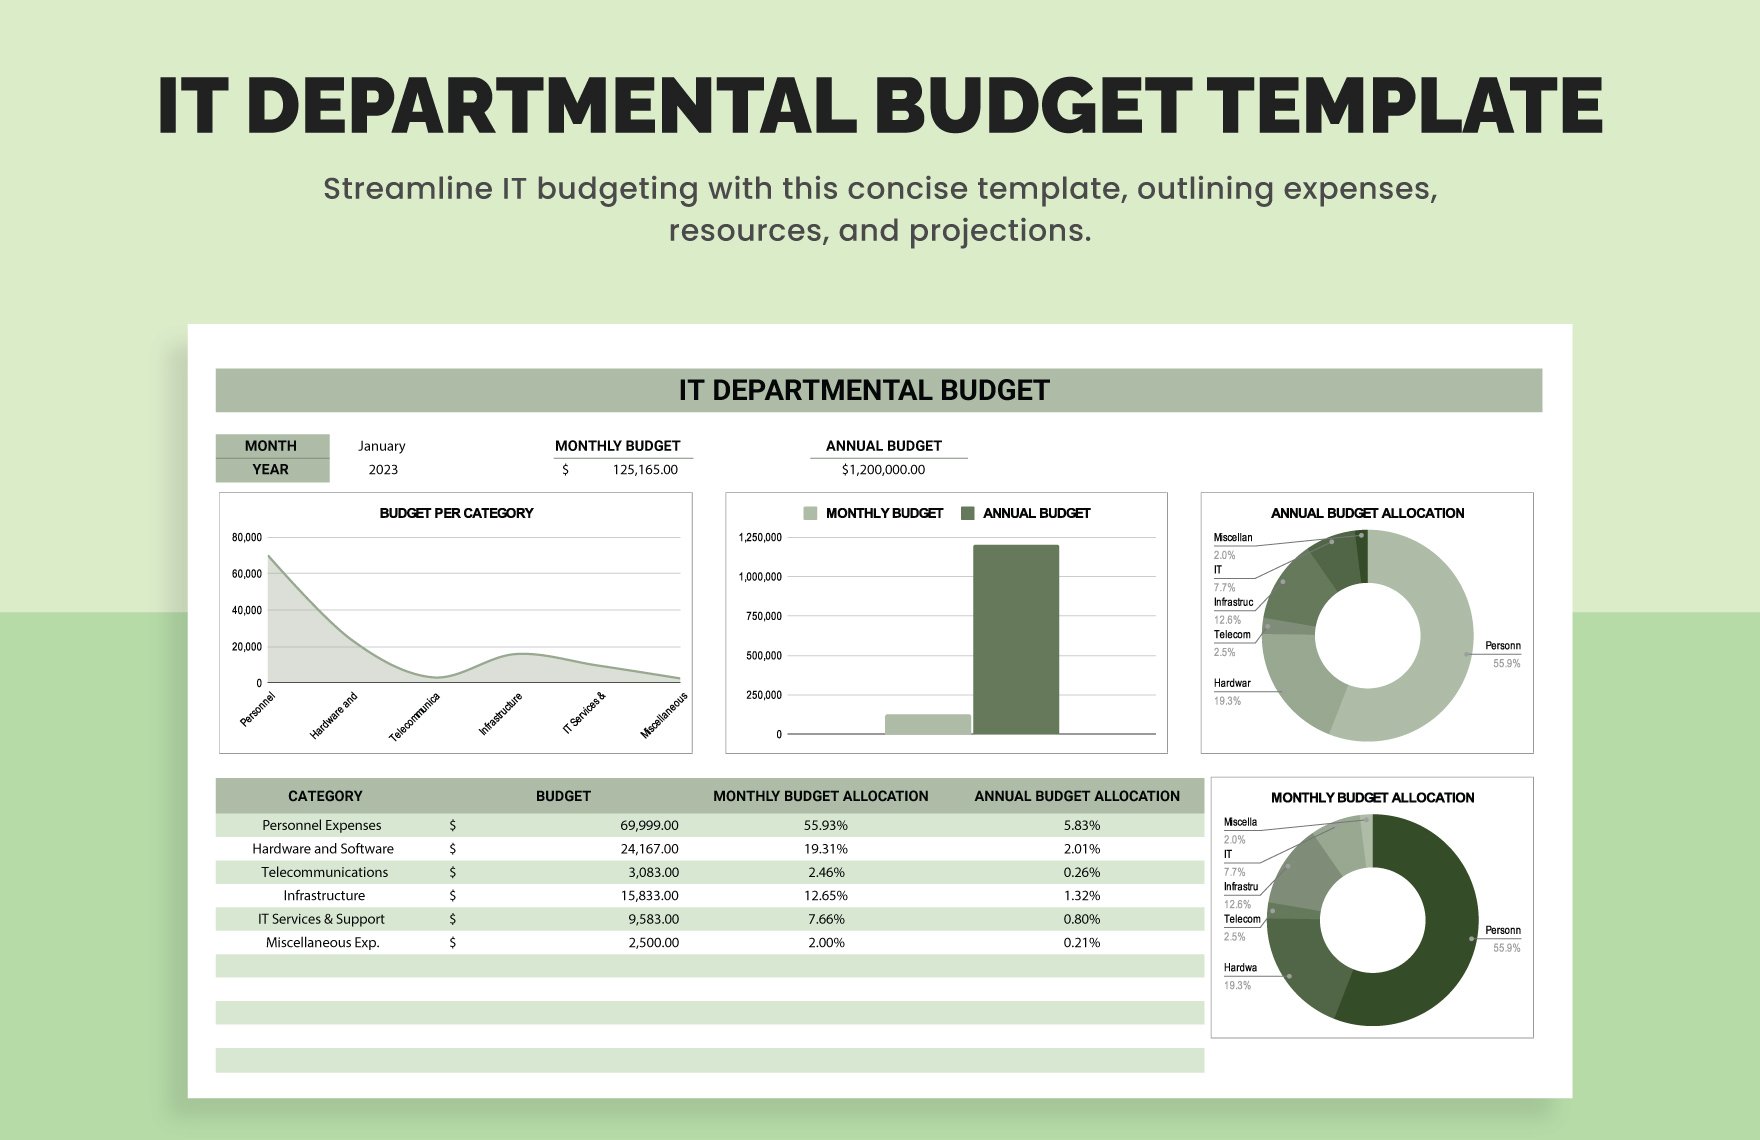 IT Departmental Budget Template